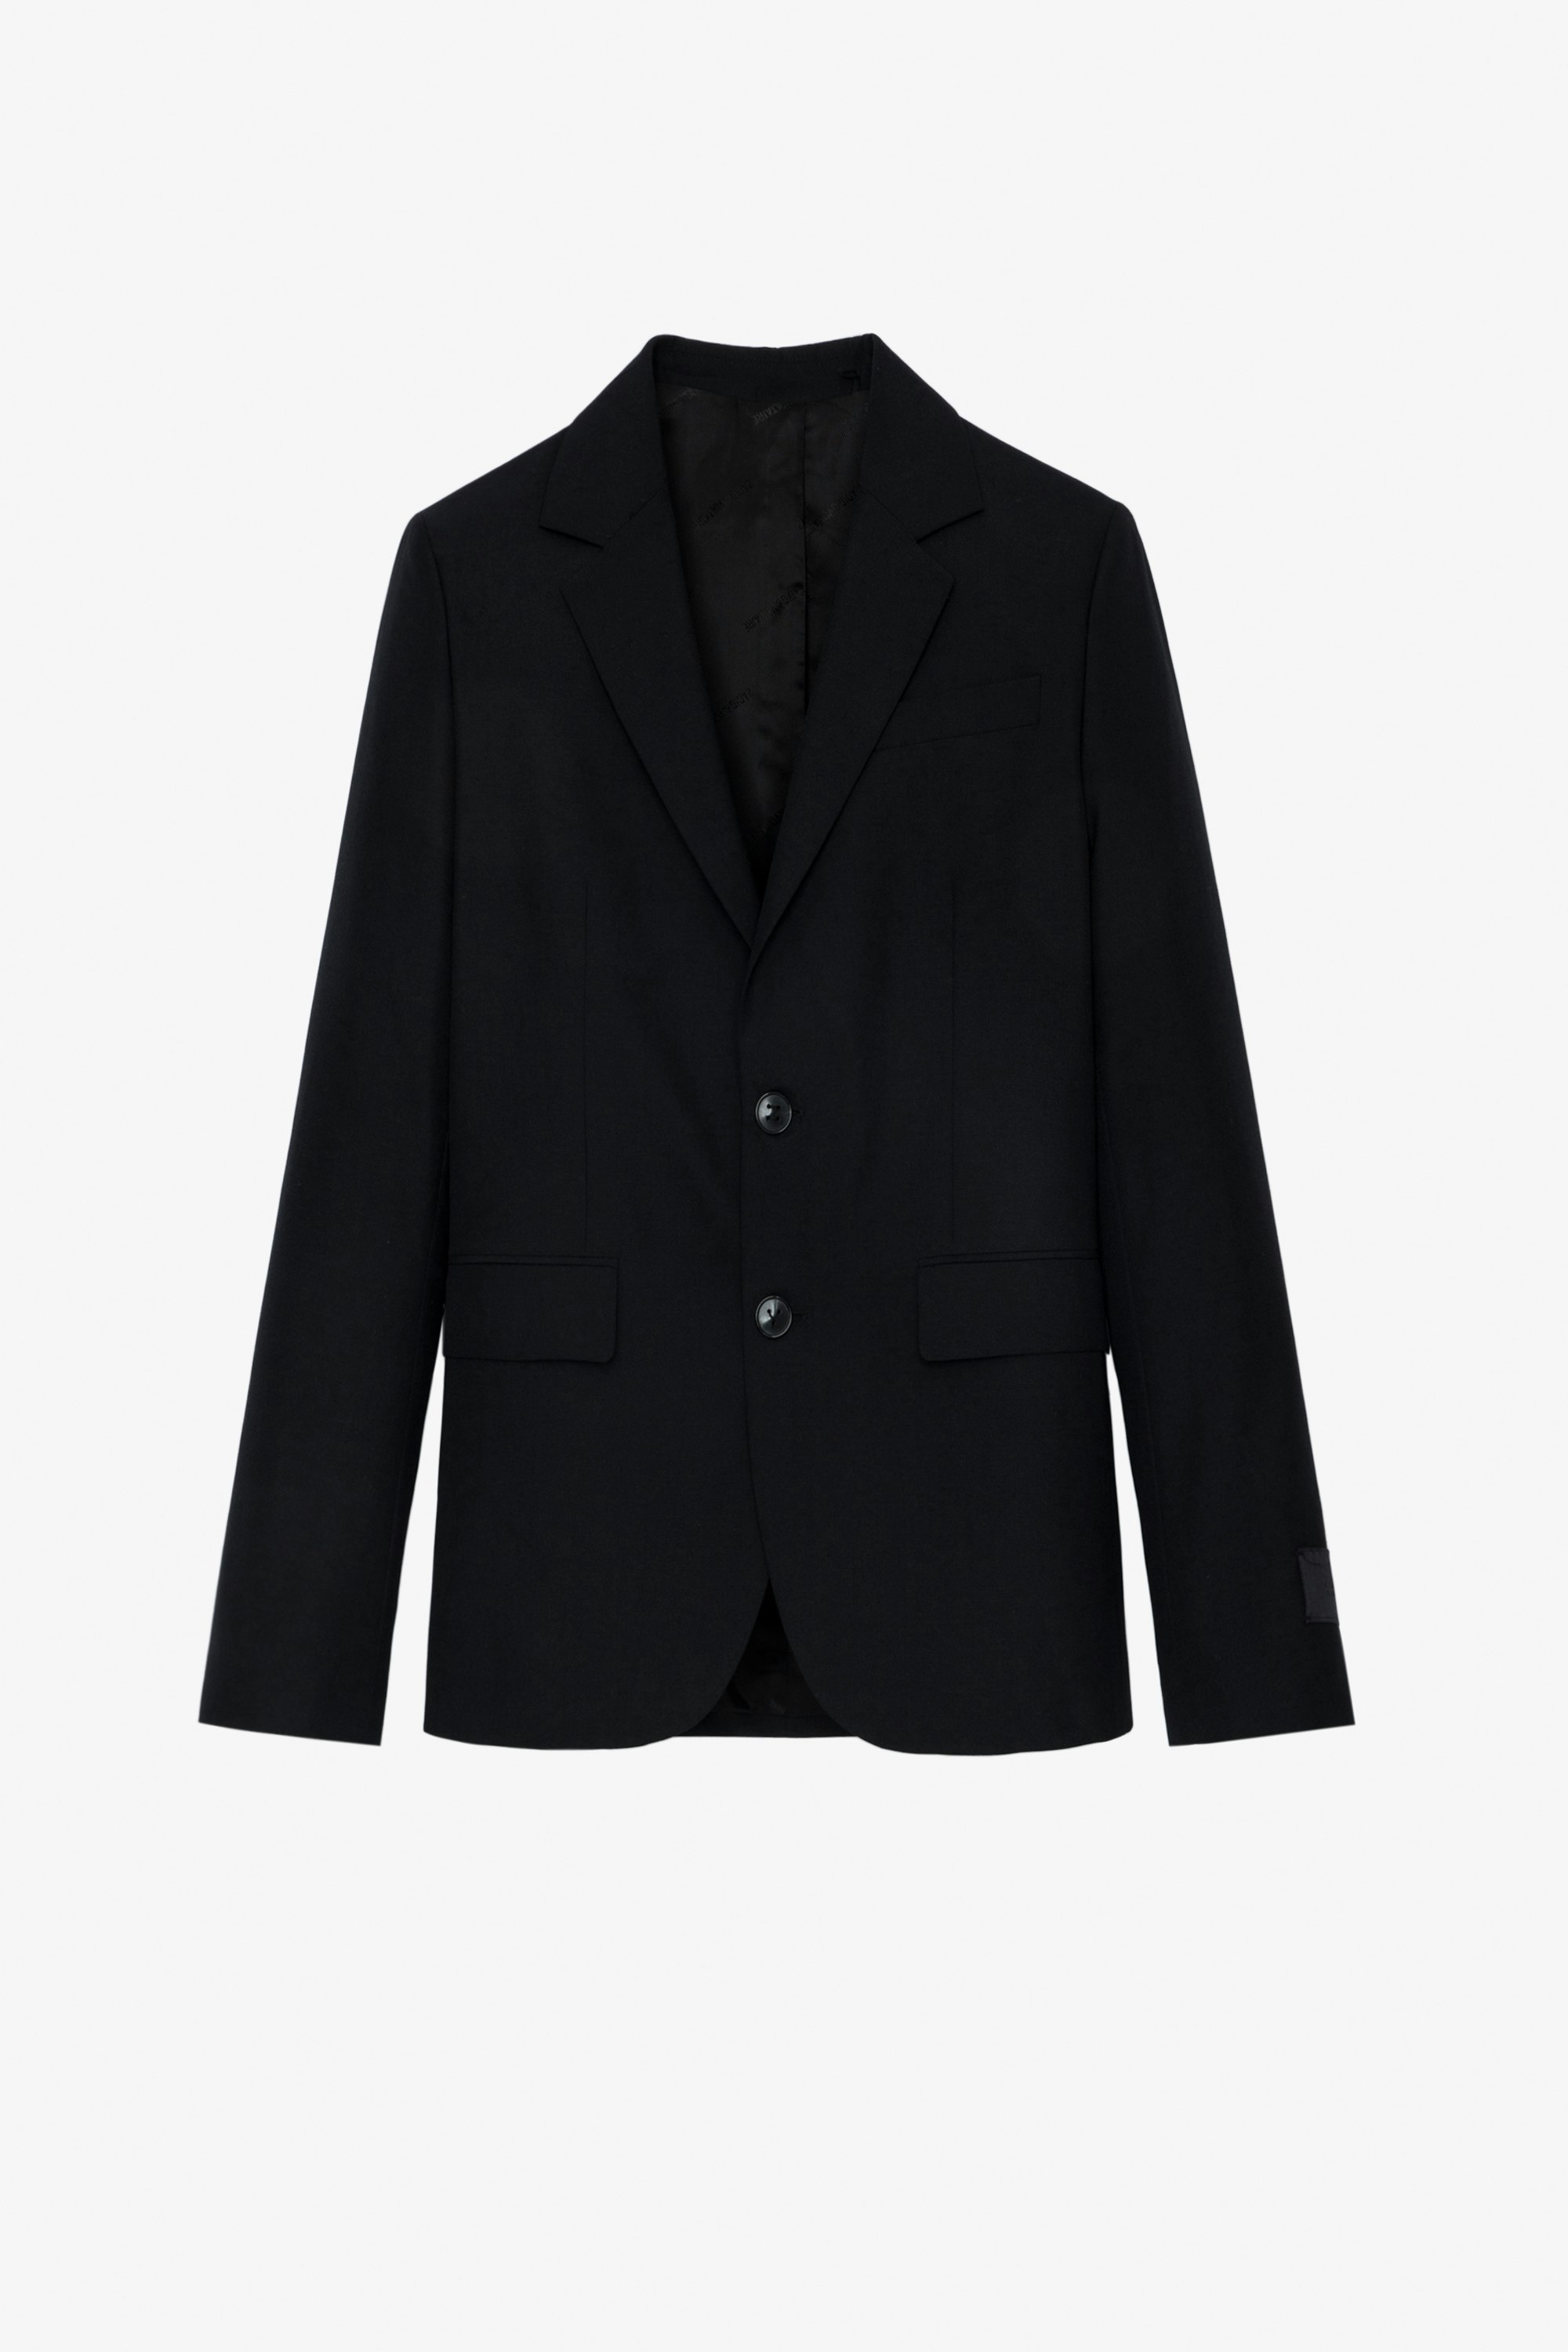 Viks Blazer - Women’s black suit jacket with pockets